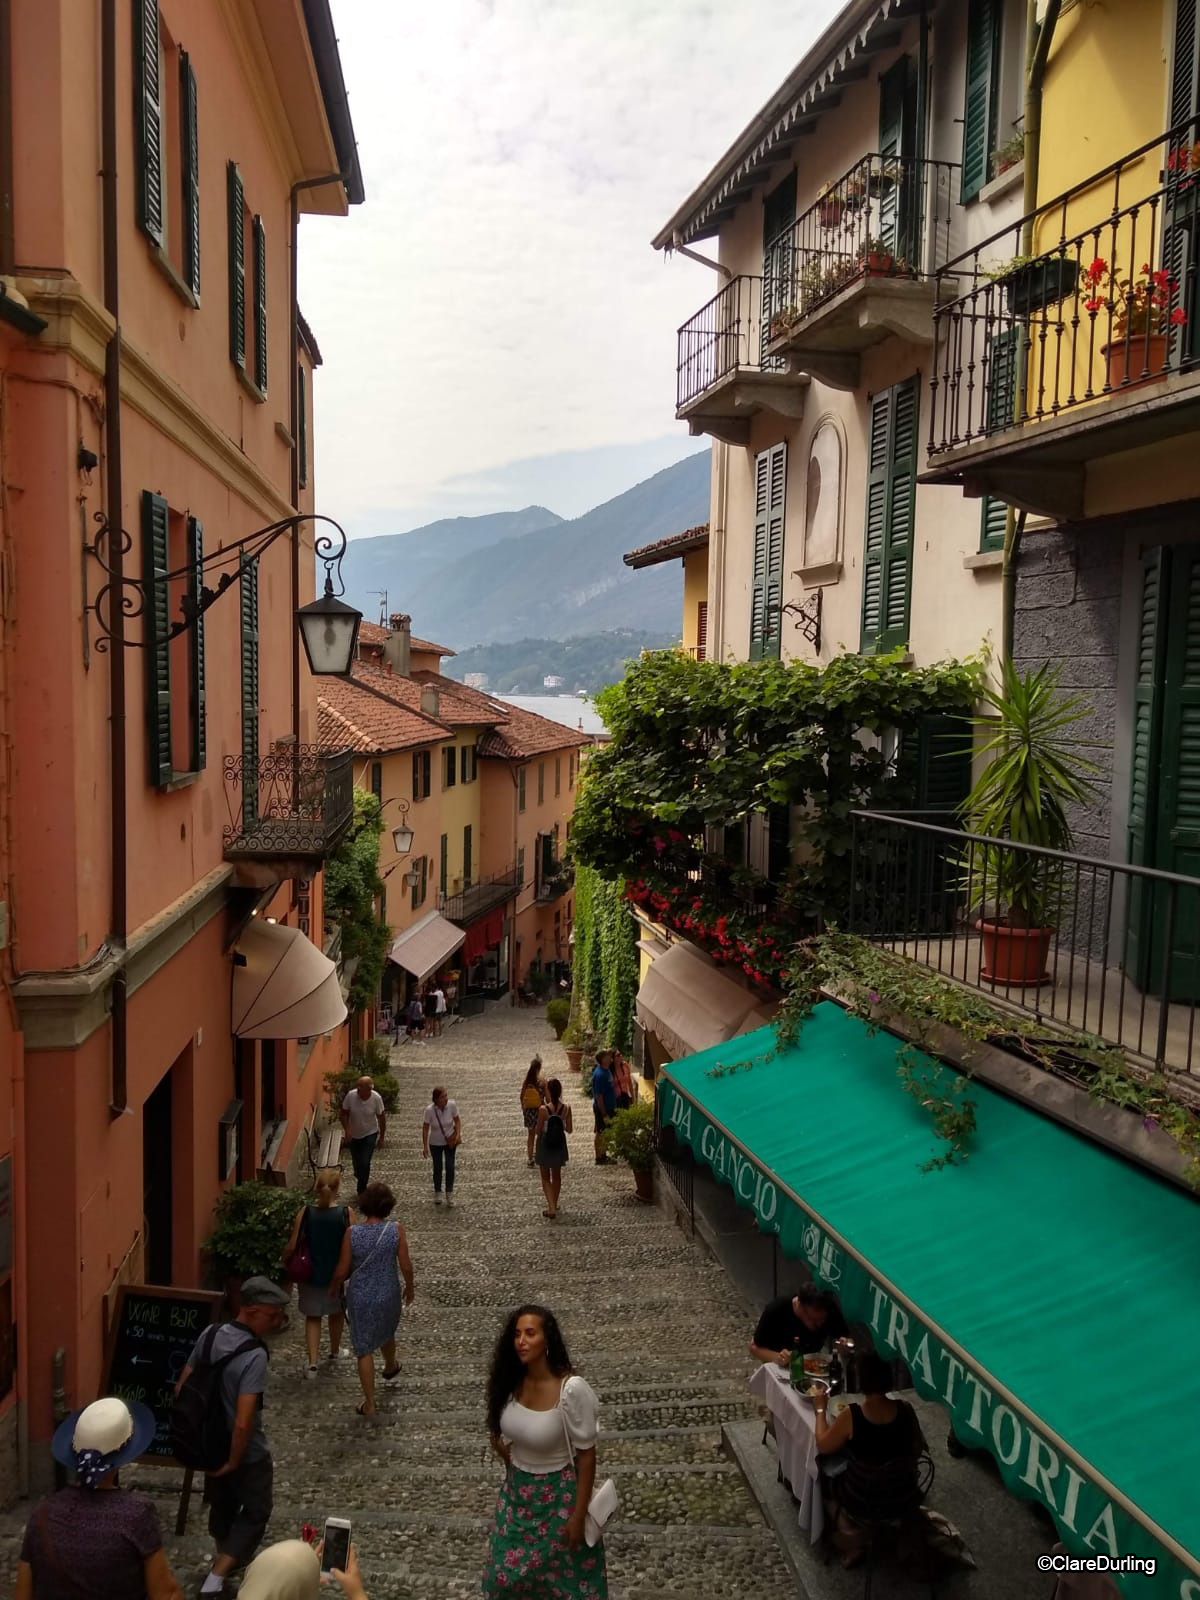 Streets of Bellagio, Italy